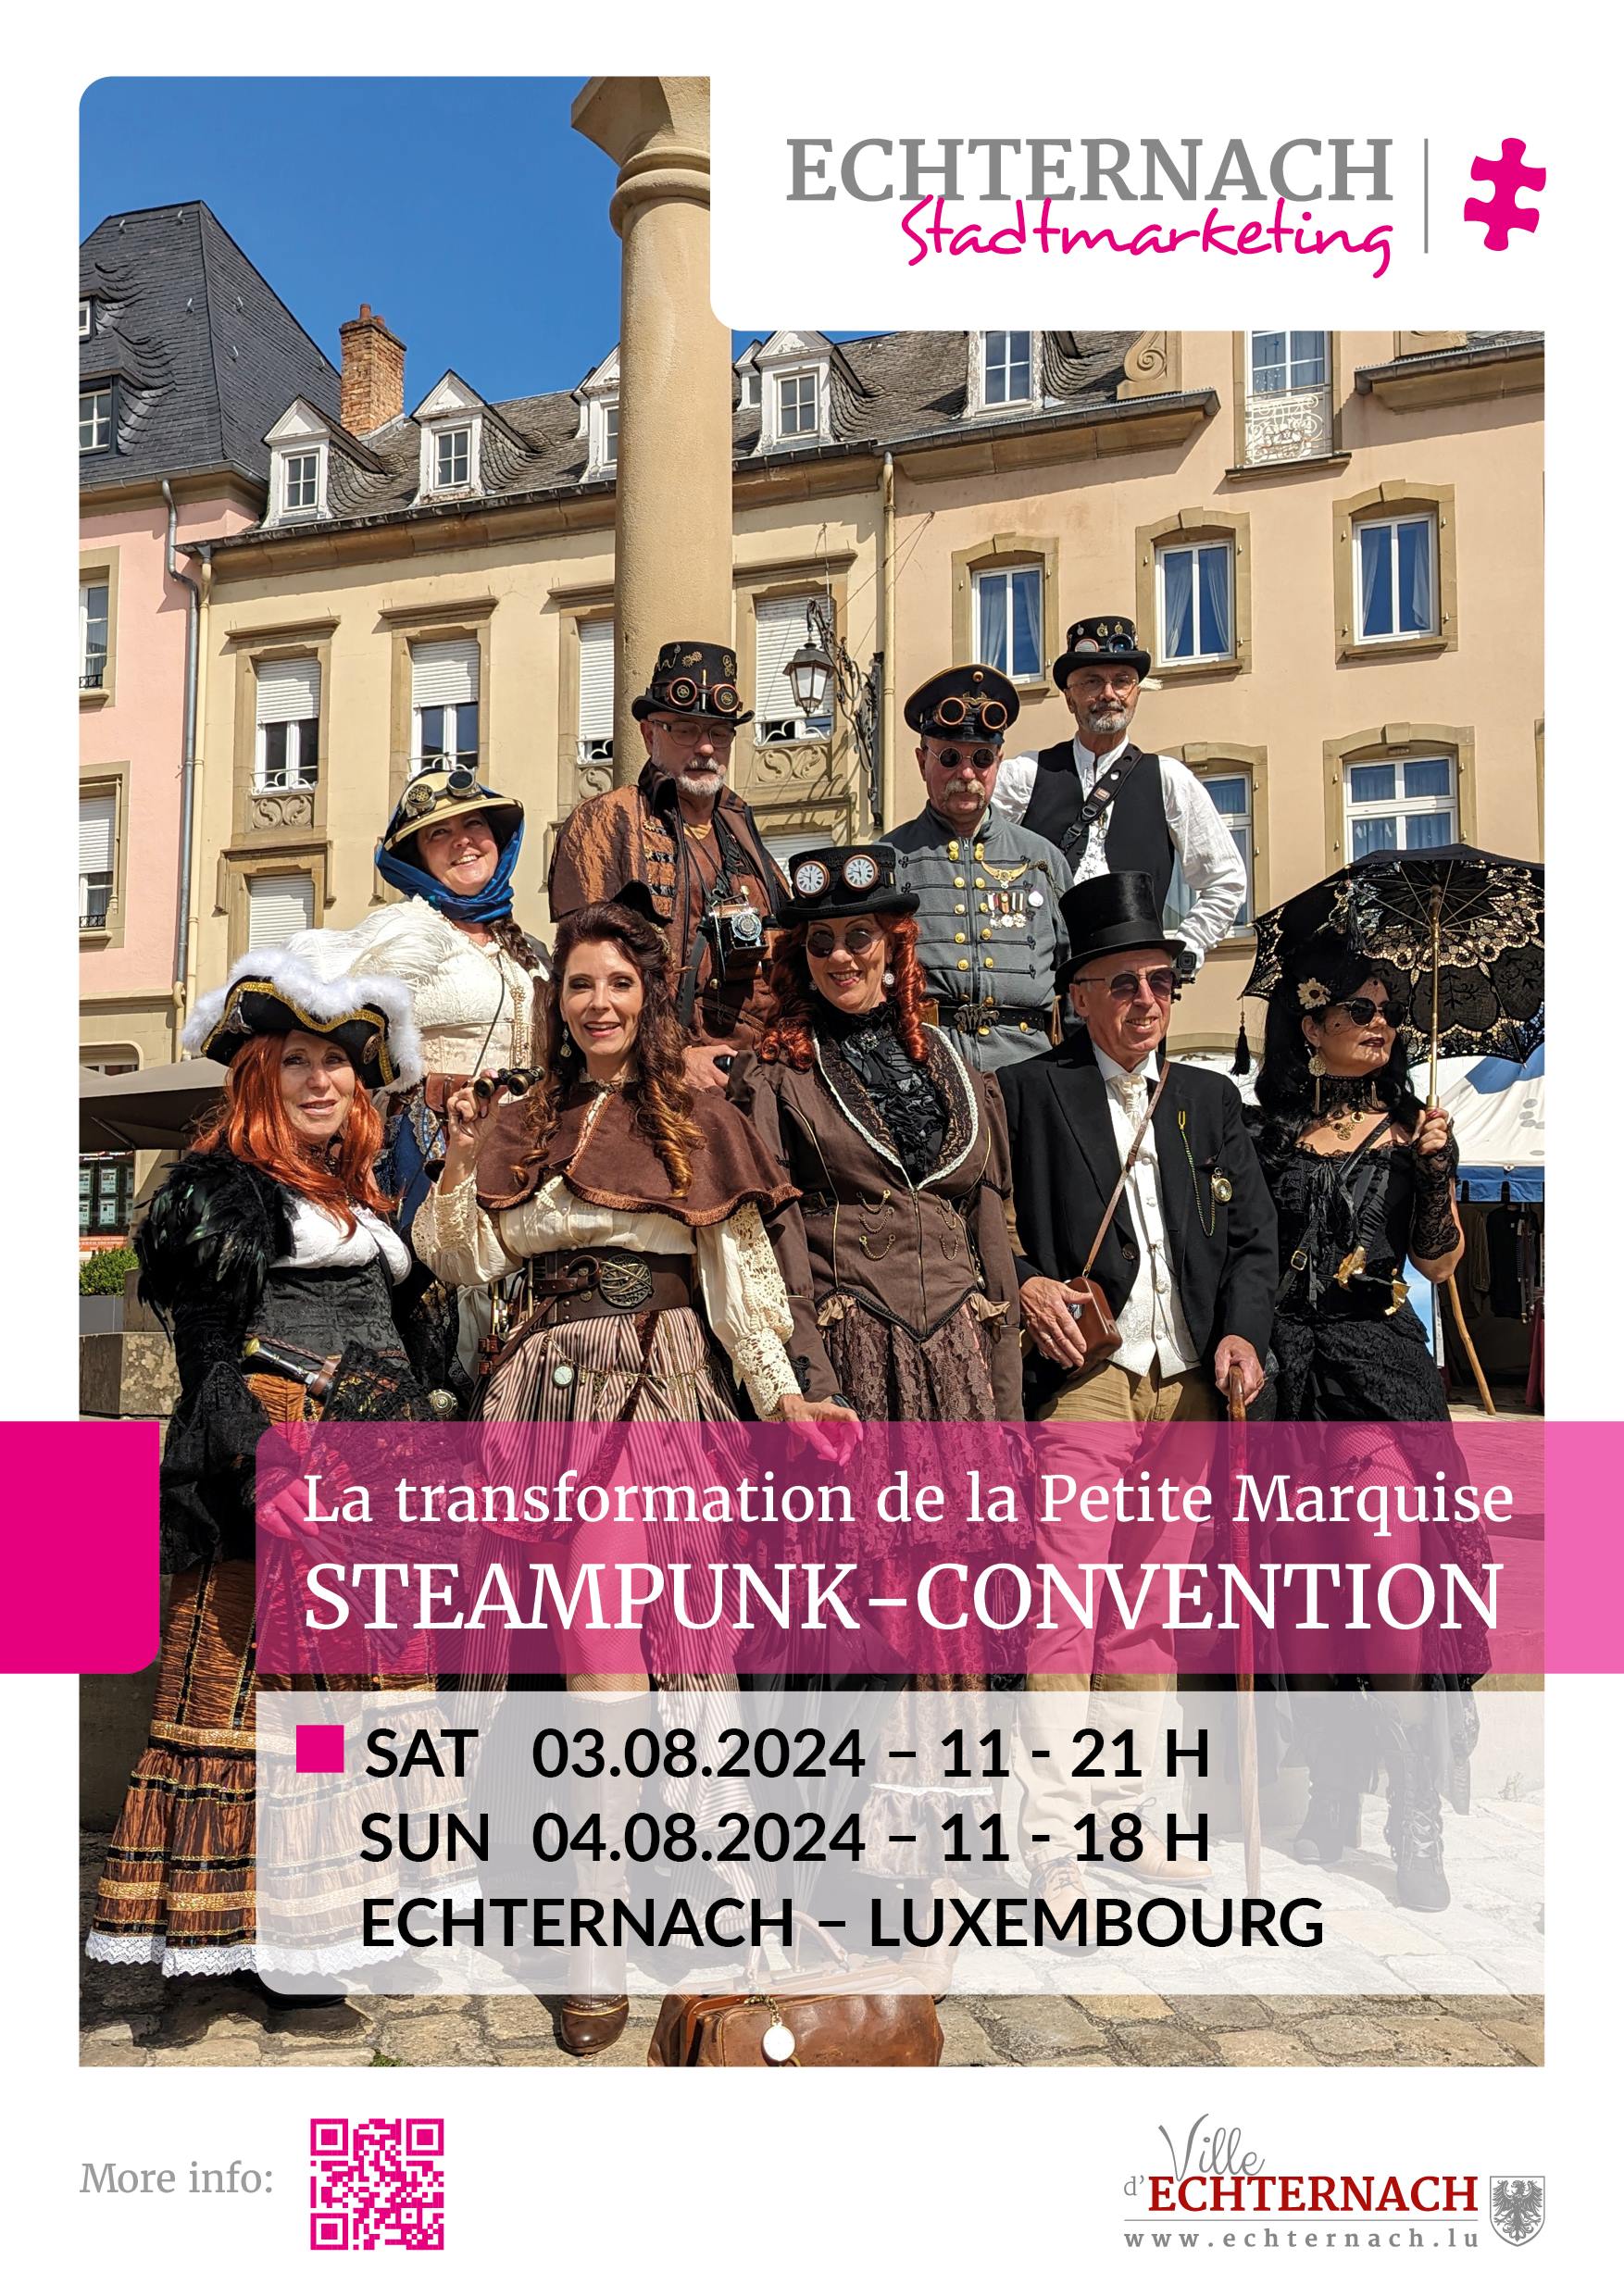 SteampunkConvention Echternach 03/08/2024 Syndicat d'initiative